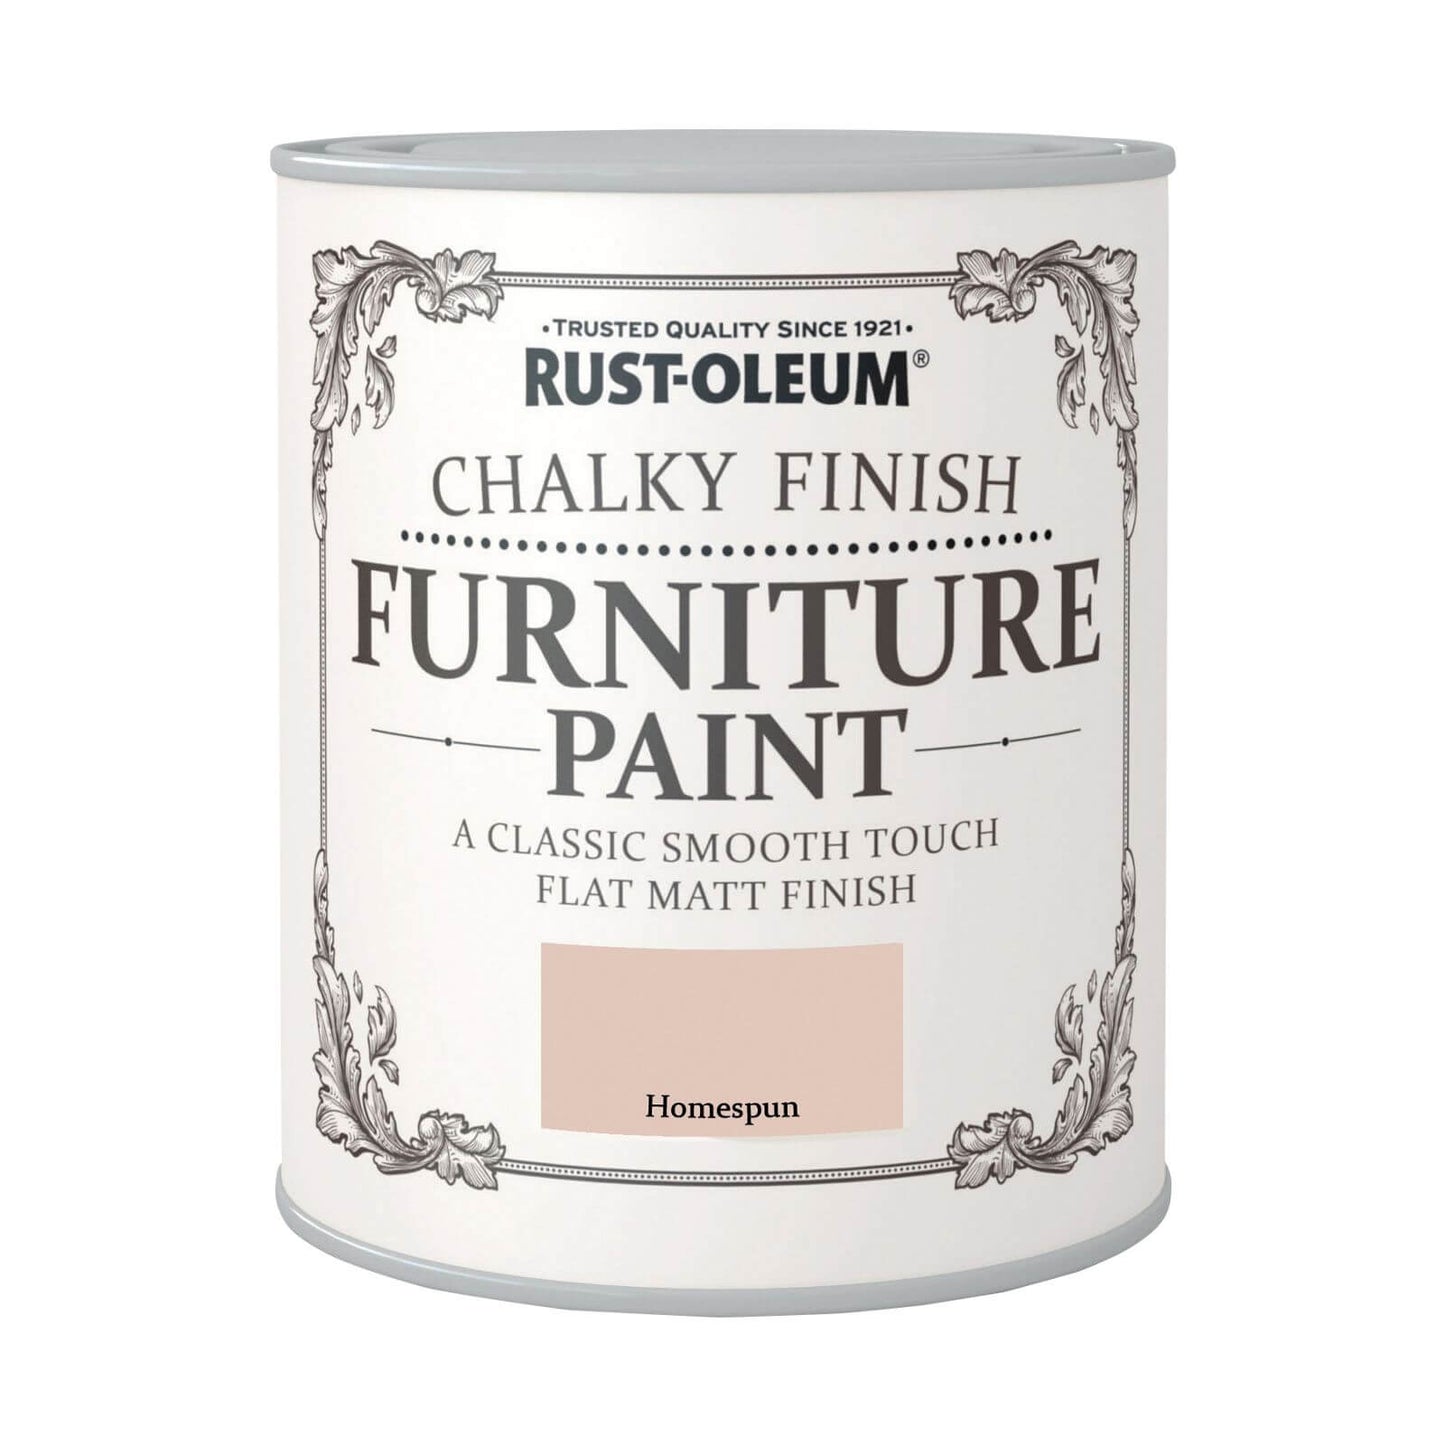 Rust-Oleum Chalky Finish Furniture Paint Homespun